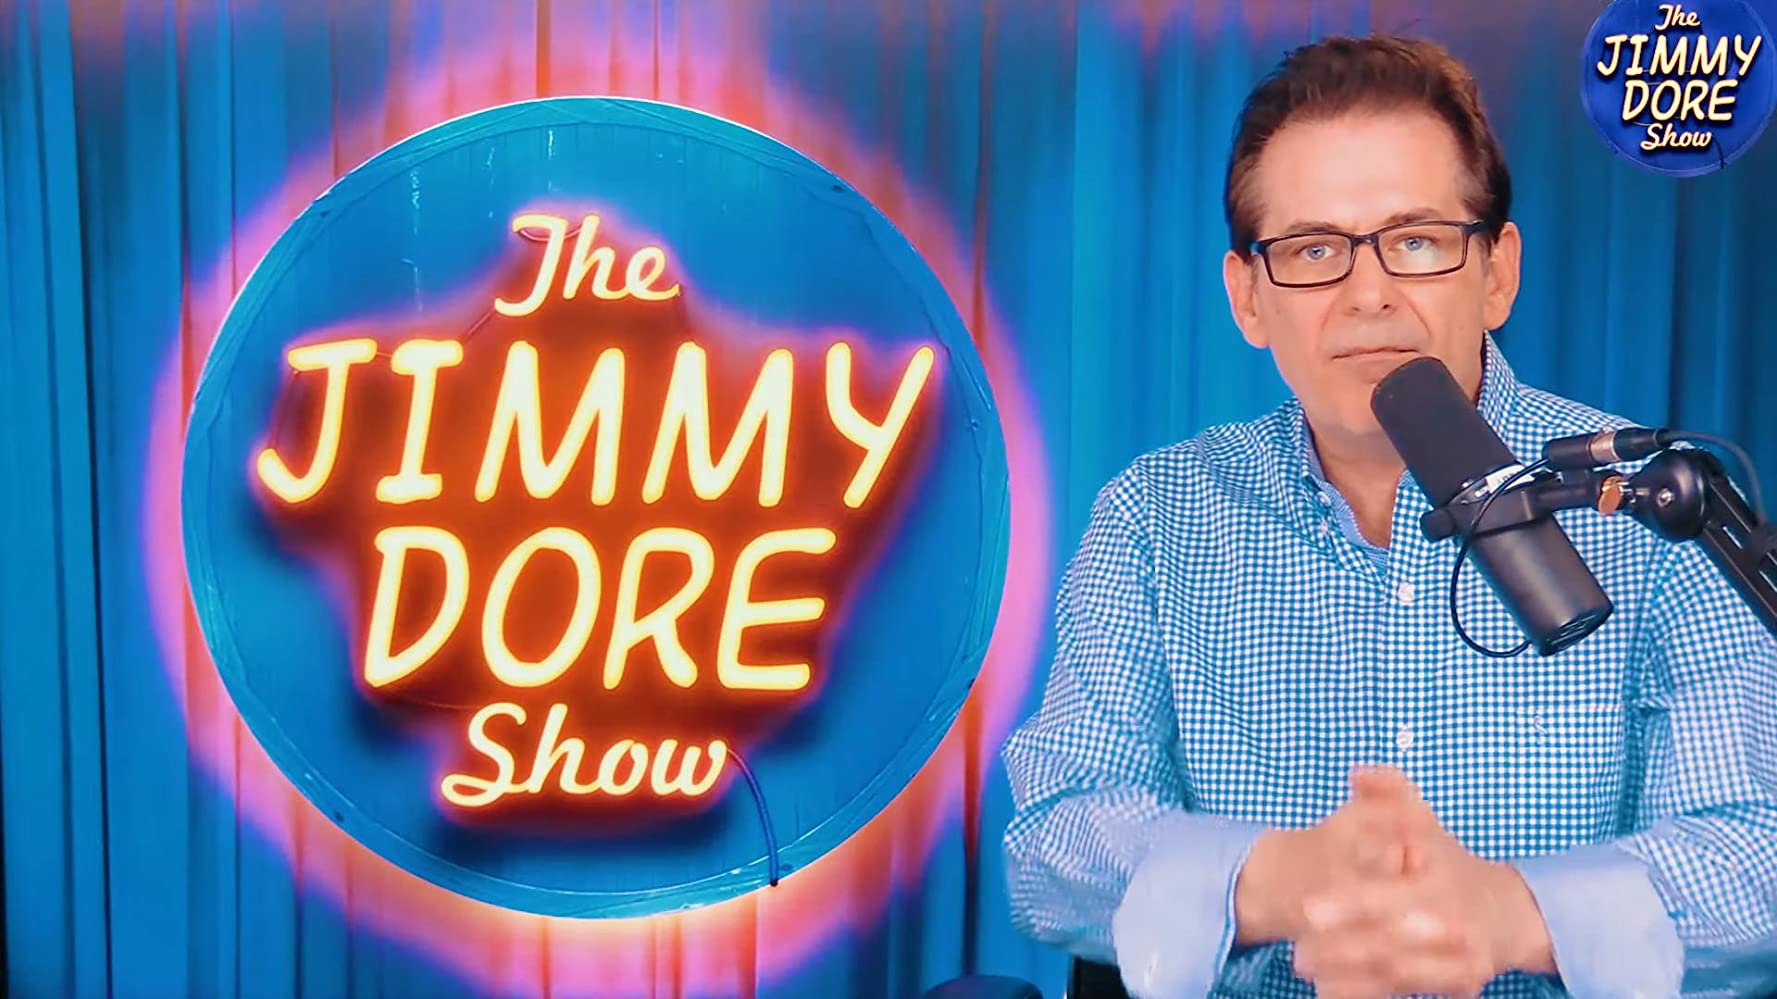 Jimmy Dore Show logo